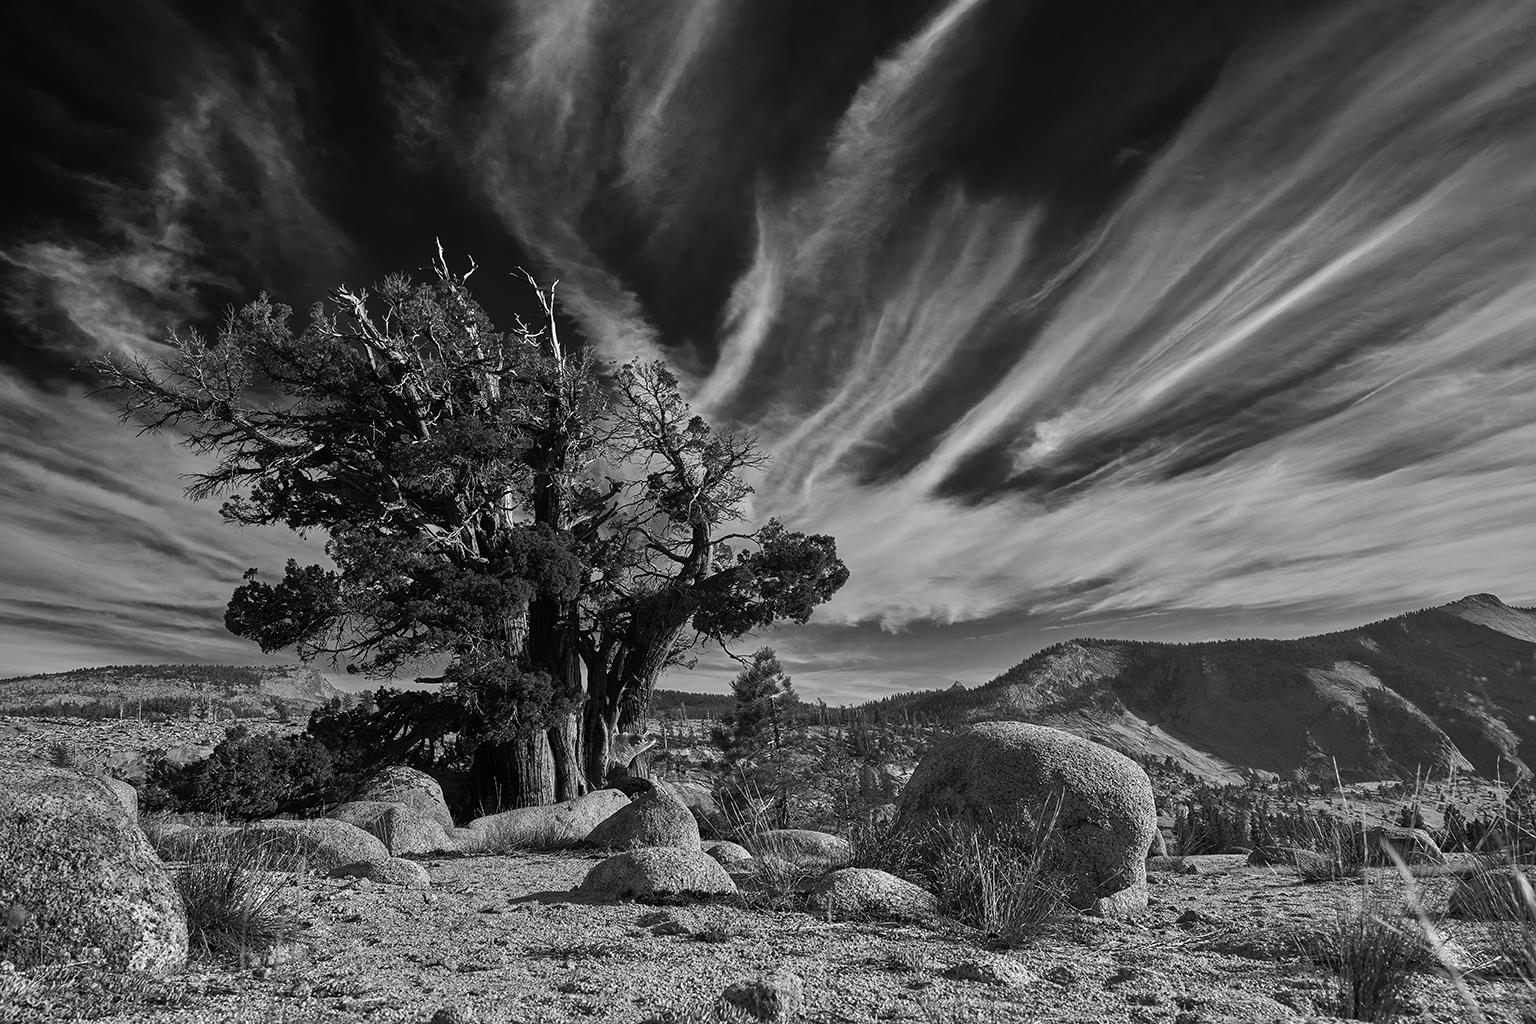 Frank Schott Landscape Print – Tree Study III – großformatige Fotografie einer dramatischen Berglandschaft